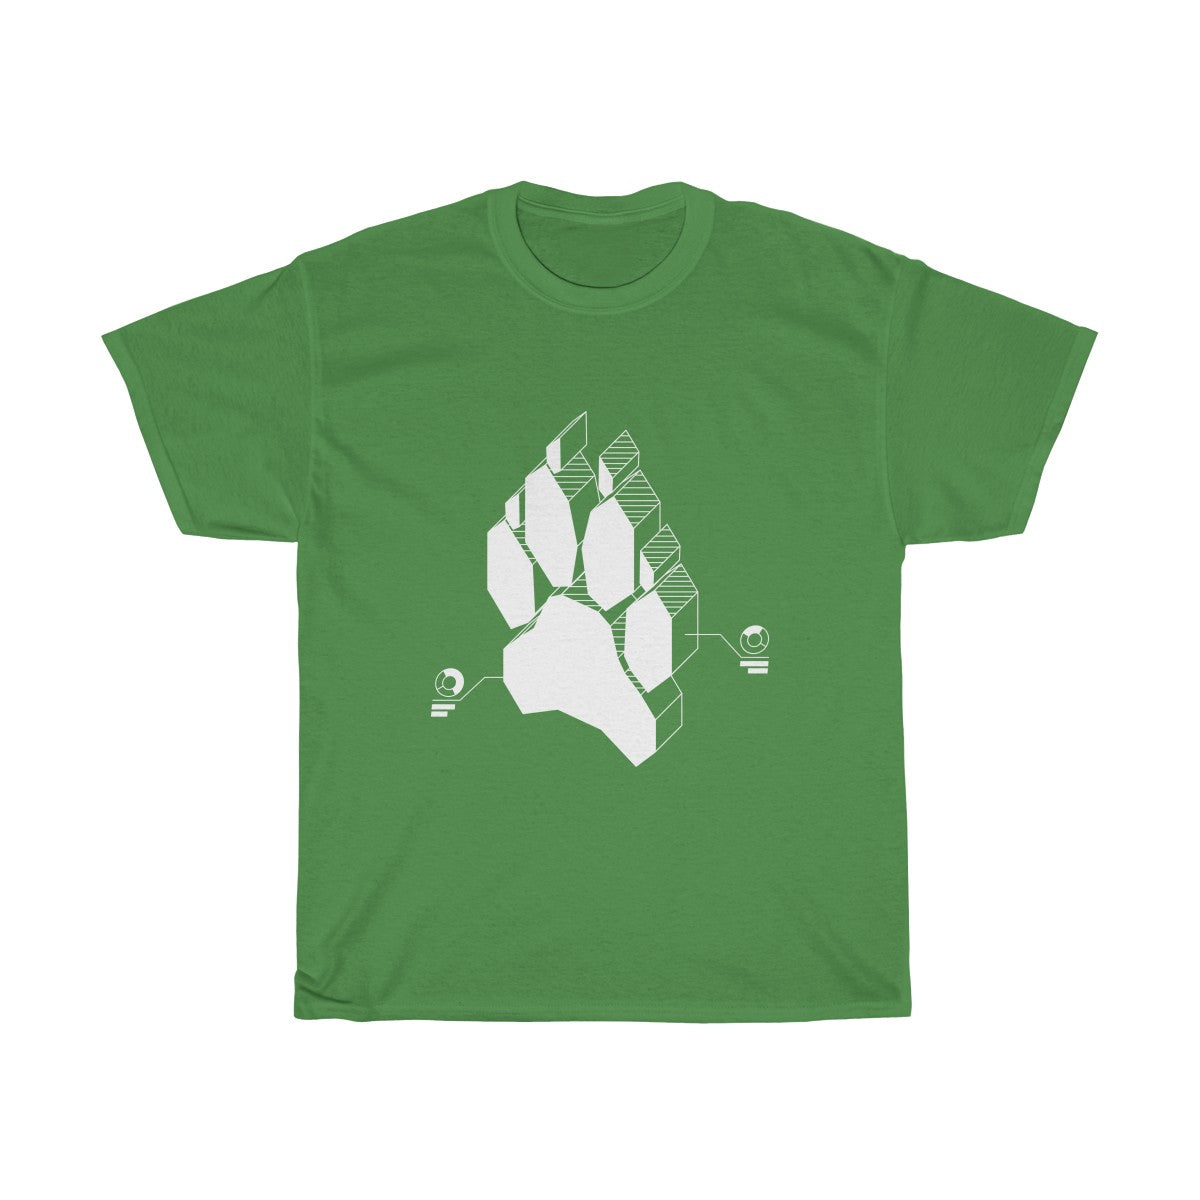 Techno Canine - T-Shirt T-Shirt Wexon Green S 